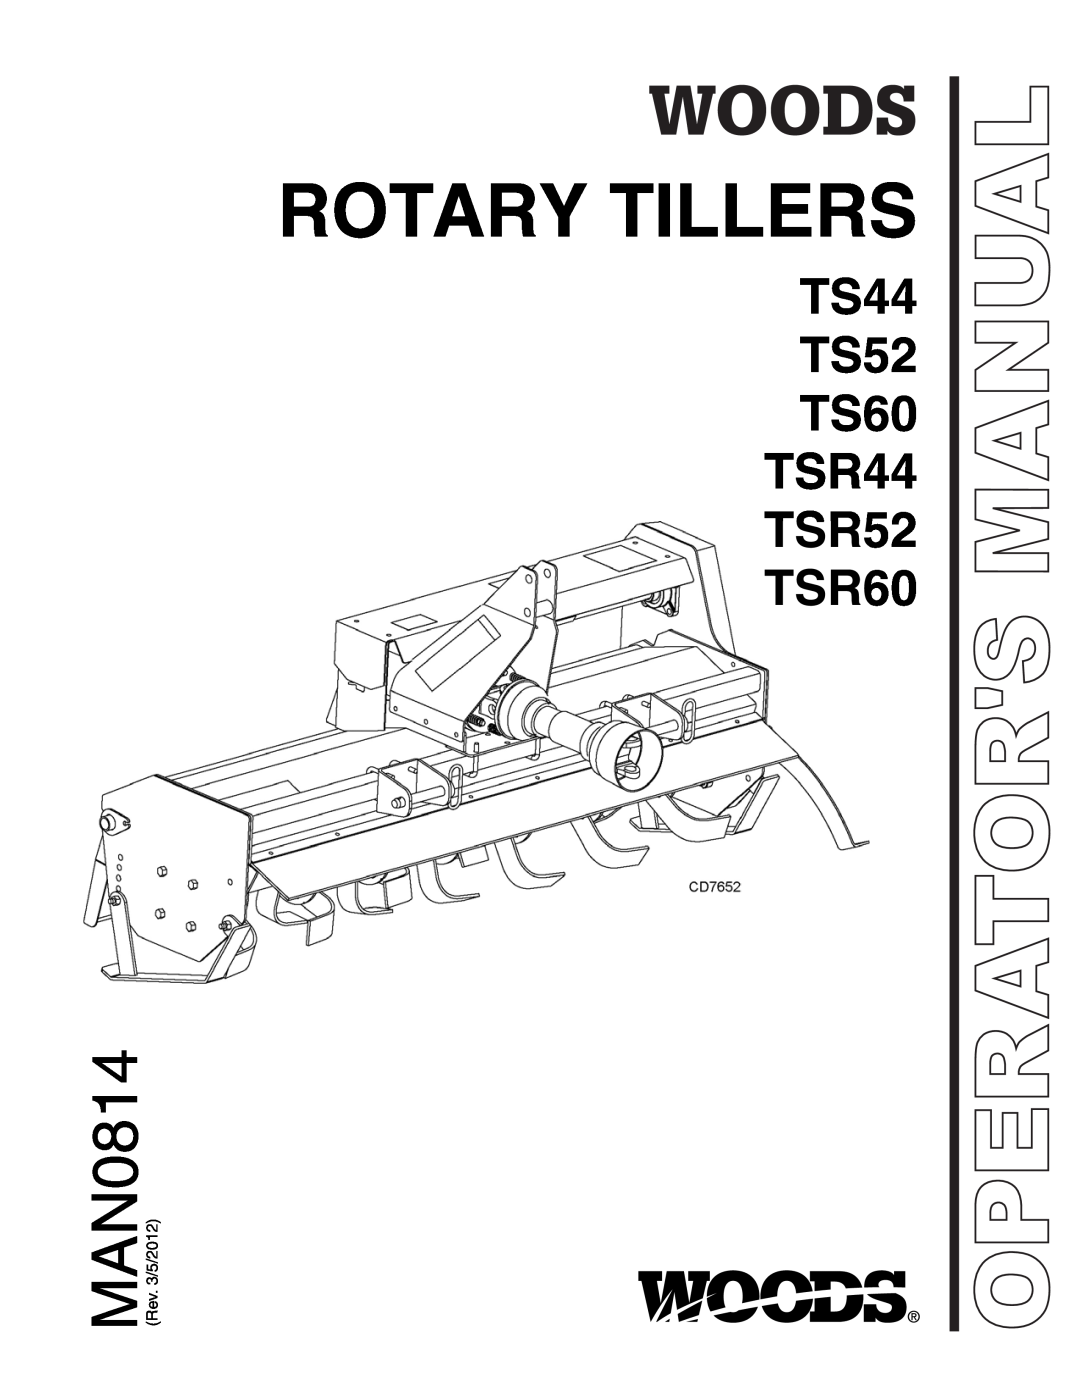 Woods Equipment manual Rotary Tillers, TS44 TS52 TS60 TSR44 TSR52 TSR60, Operators Manual 